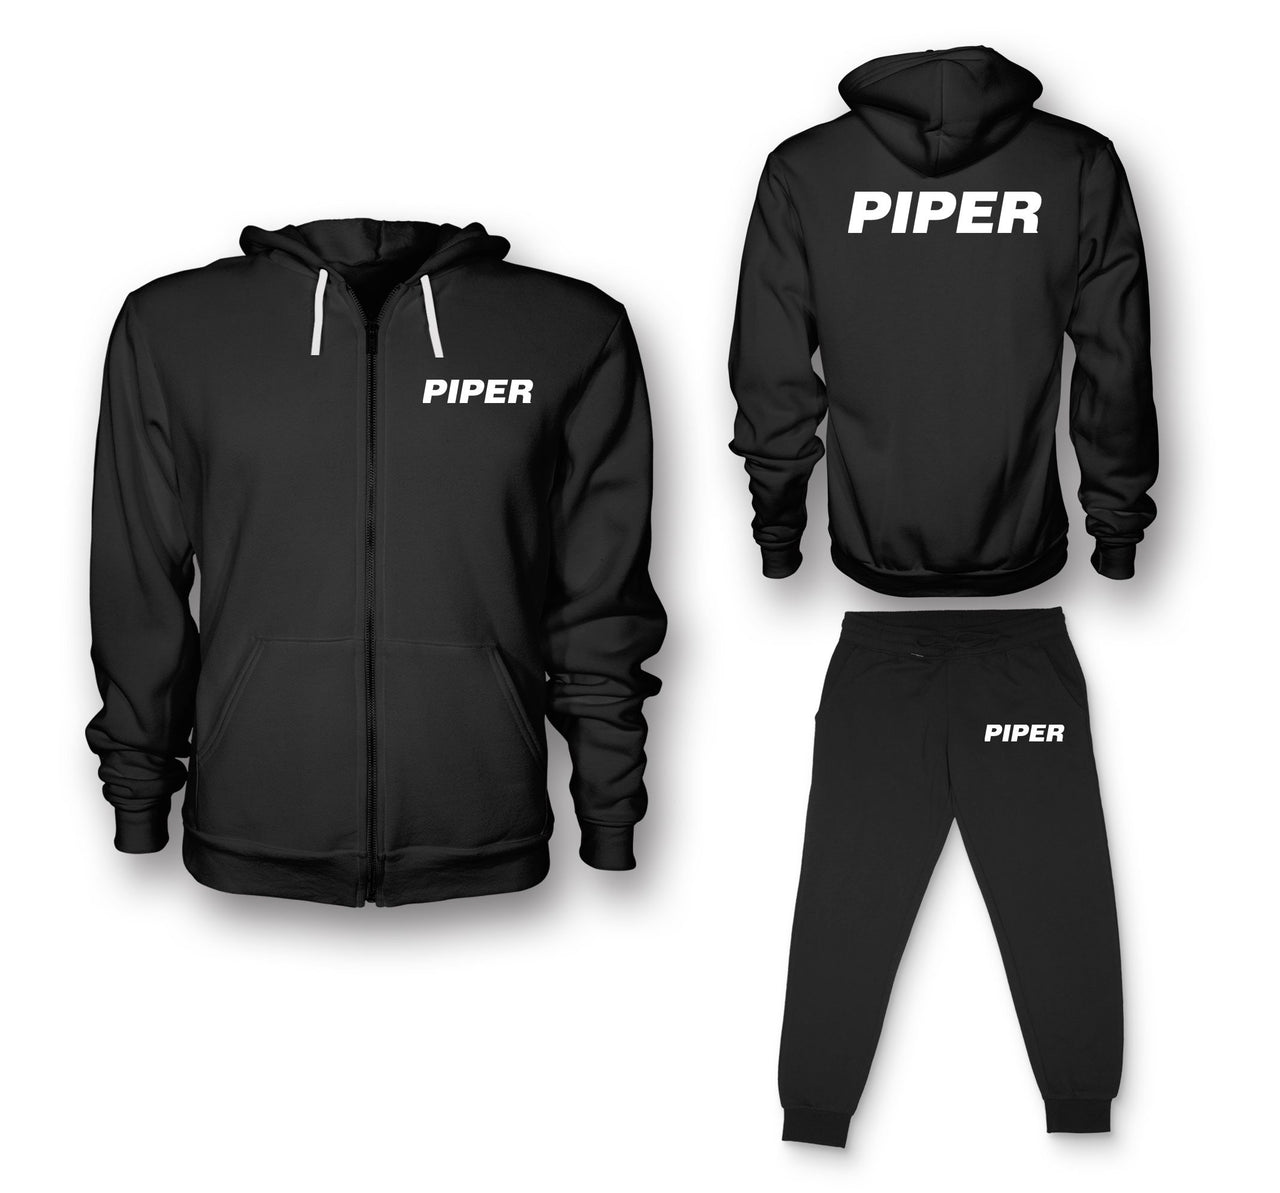 Piper & Text Designed Zipped Hoodies & Sweatpants Set